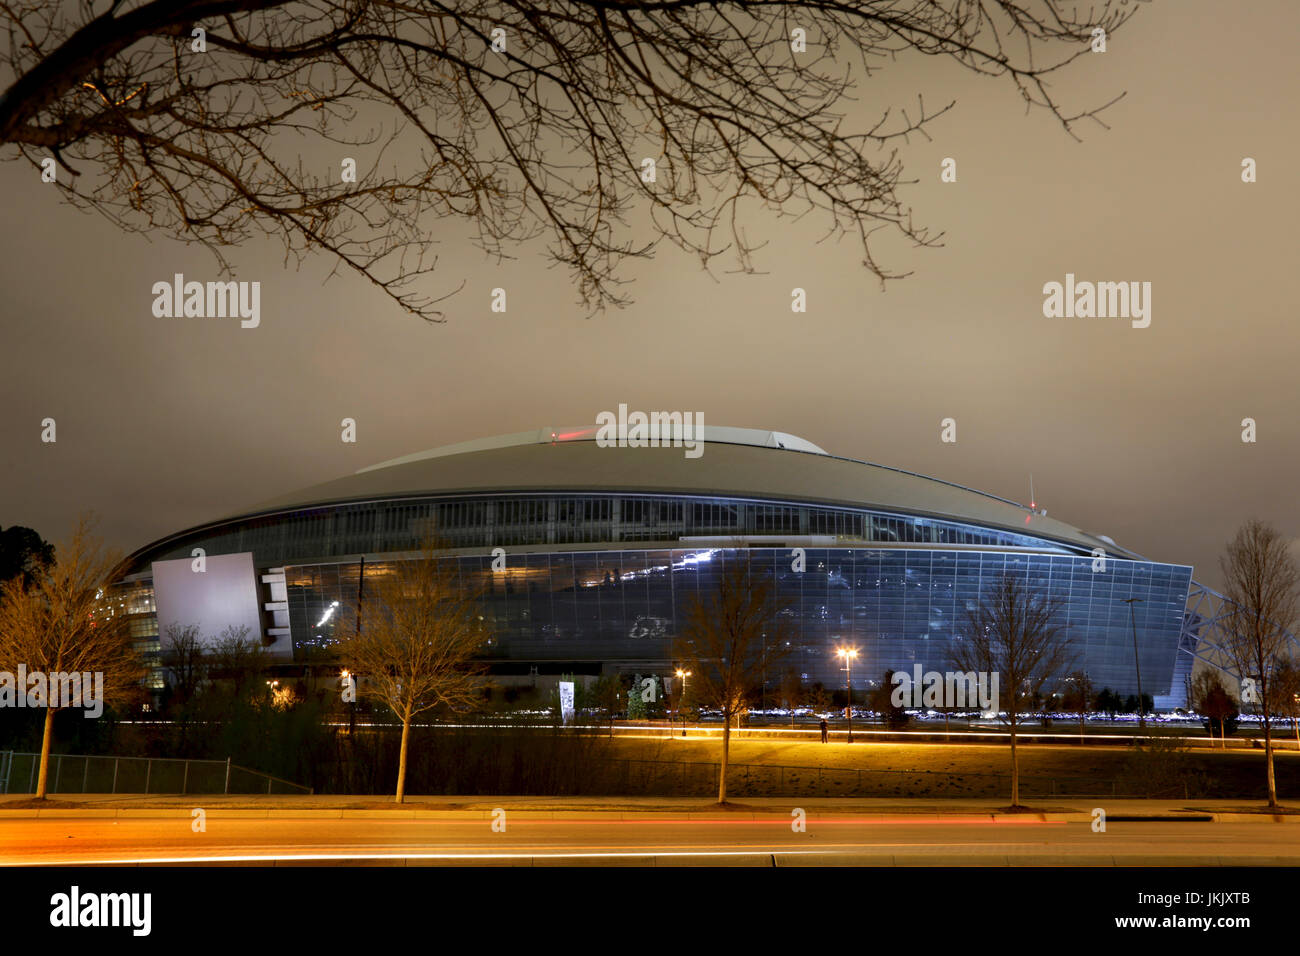 ATT Stadium Dallas Cowboys Stock Photo